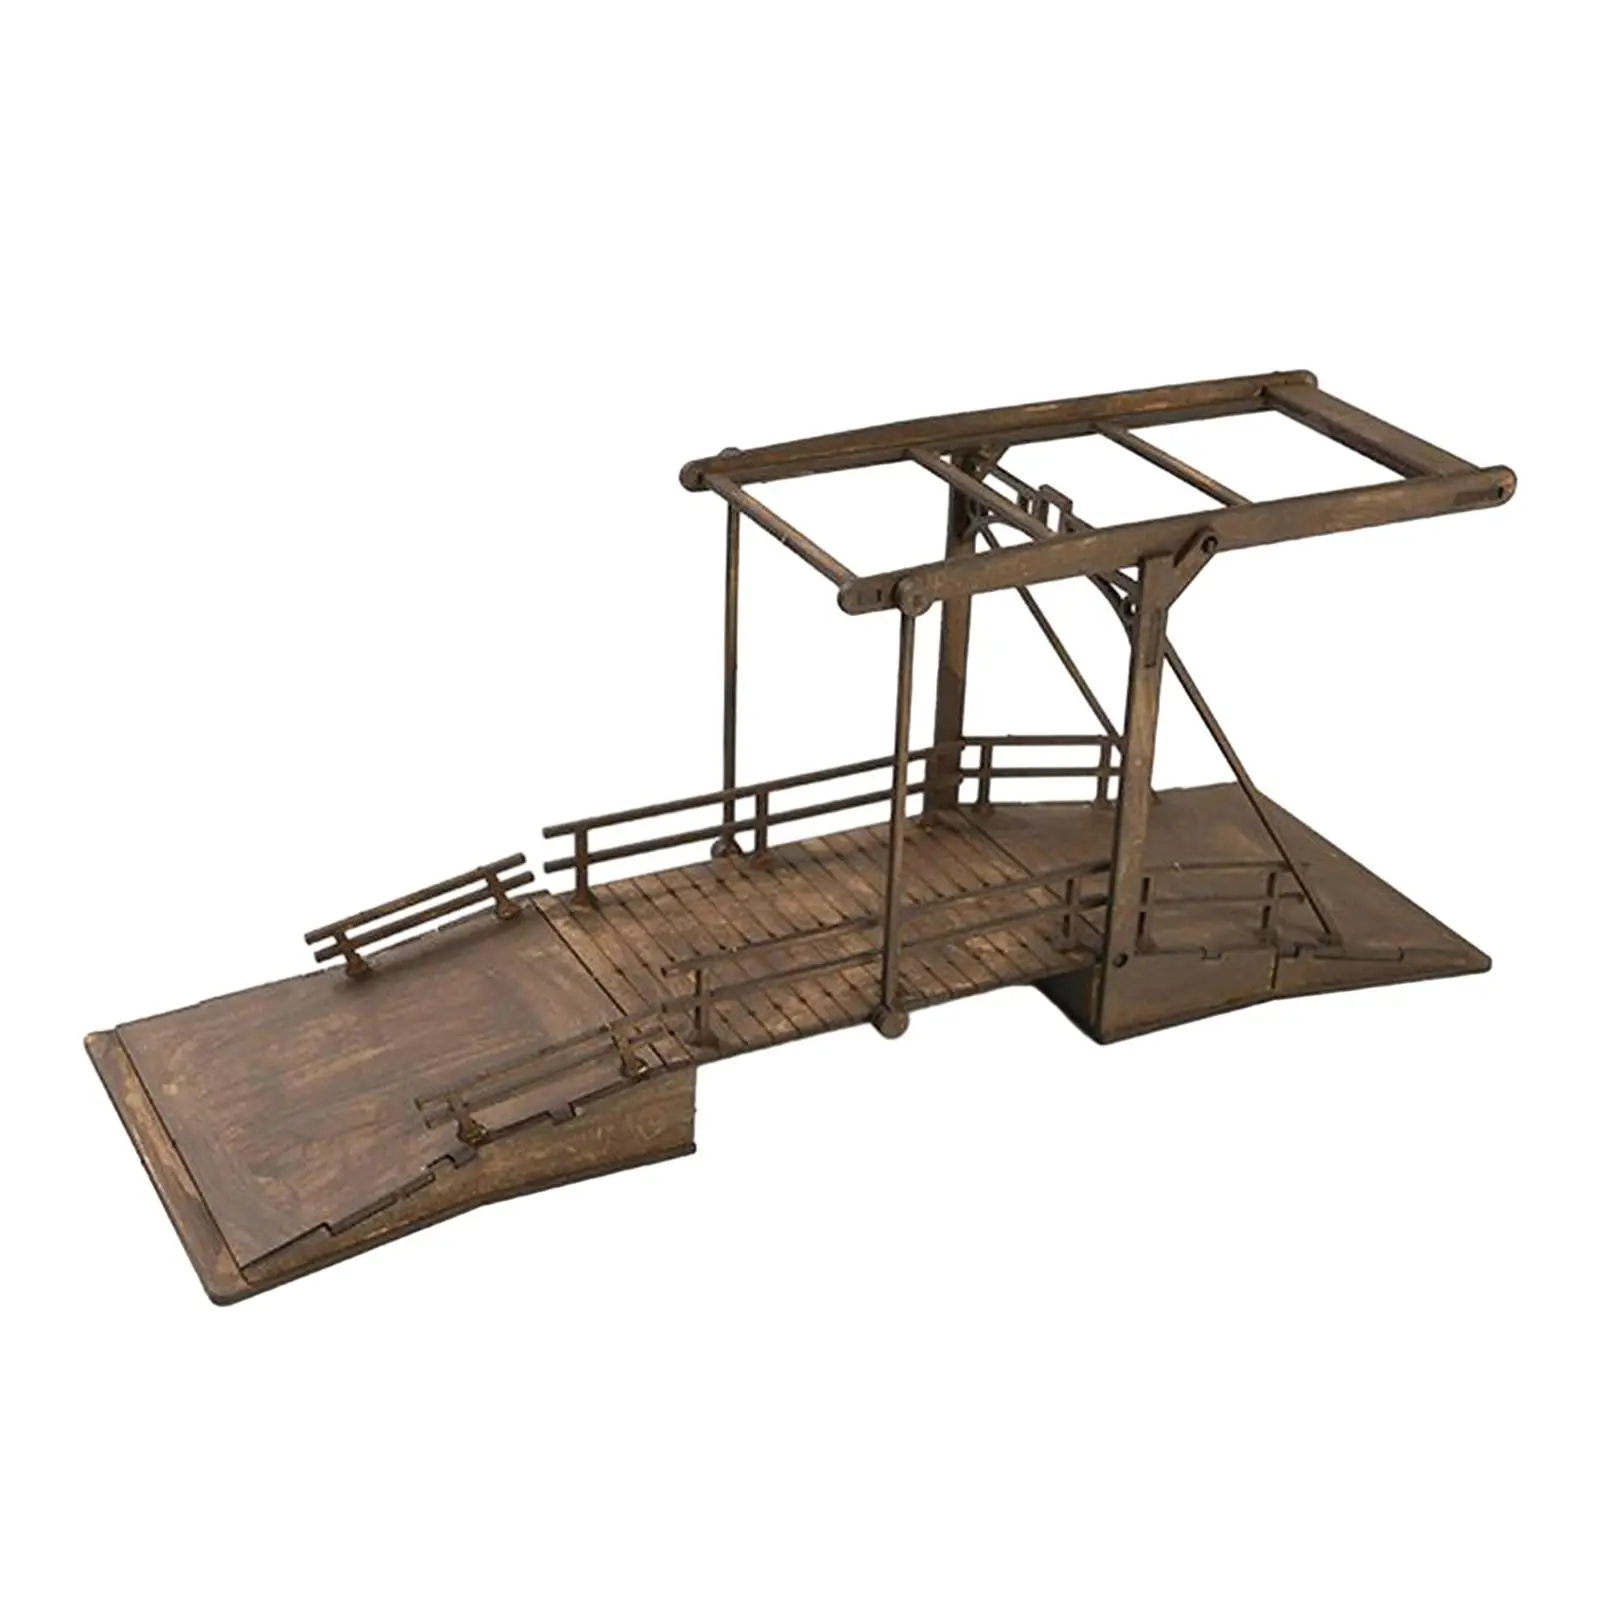 1/72 Scale 4D Wooden Bridge Model Reconnaissance Vehicles DIY Handmade for Table Scene Boys Tabletop Decor Display Party Favors